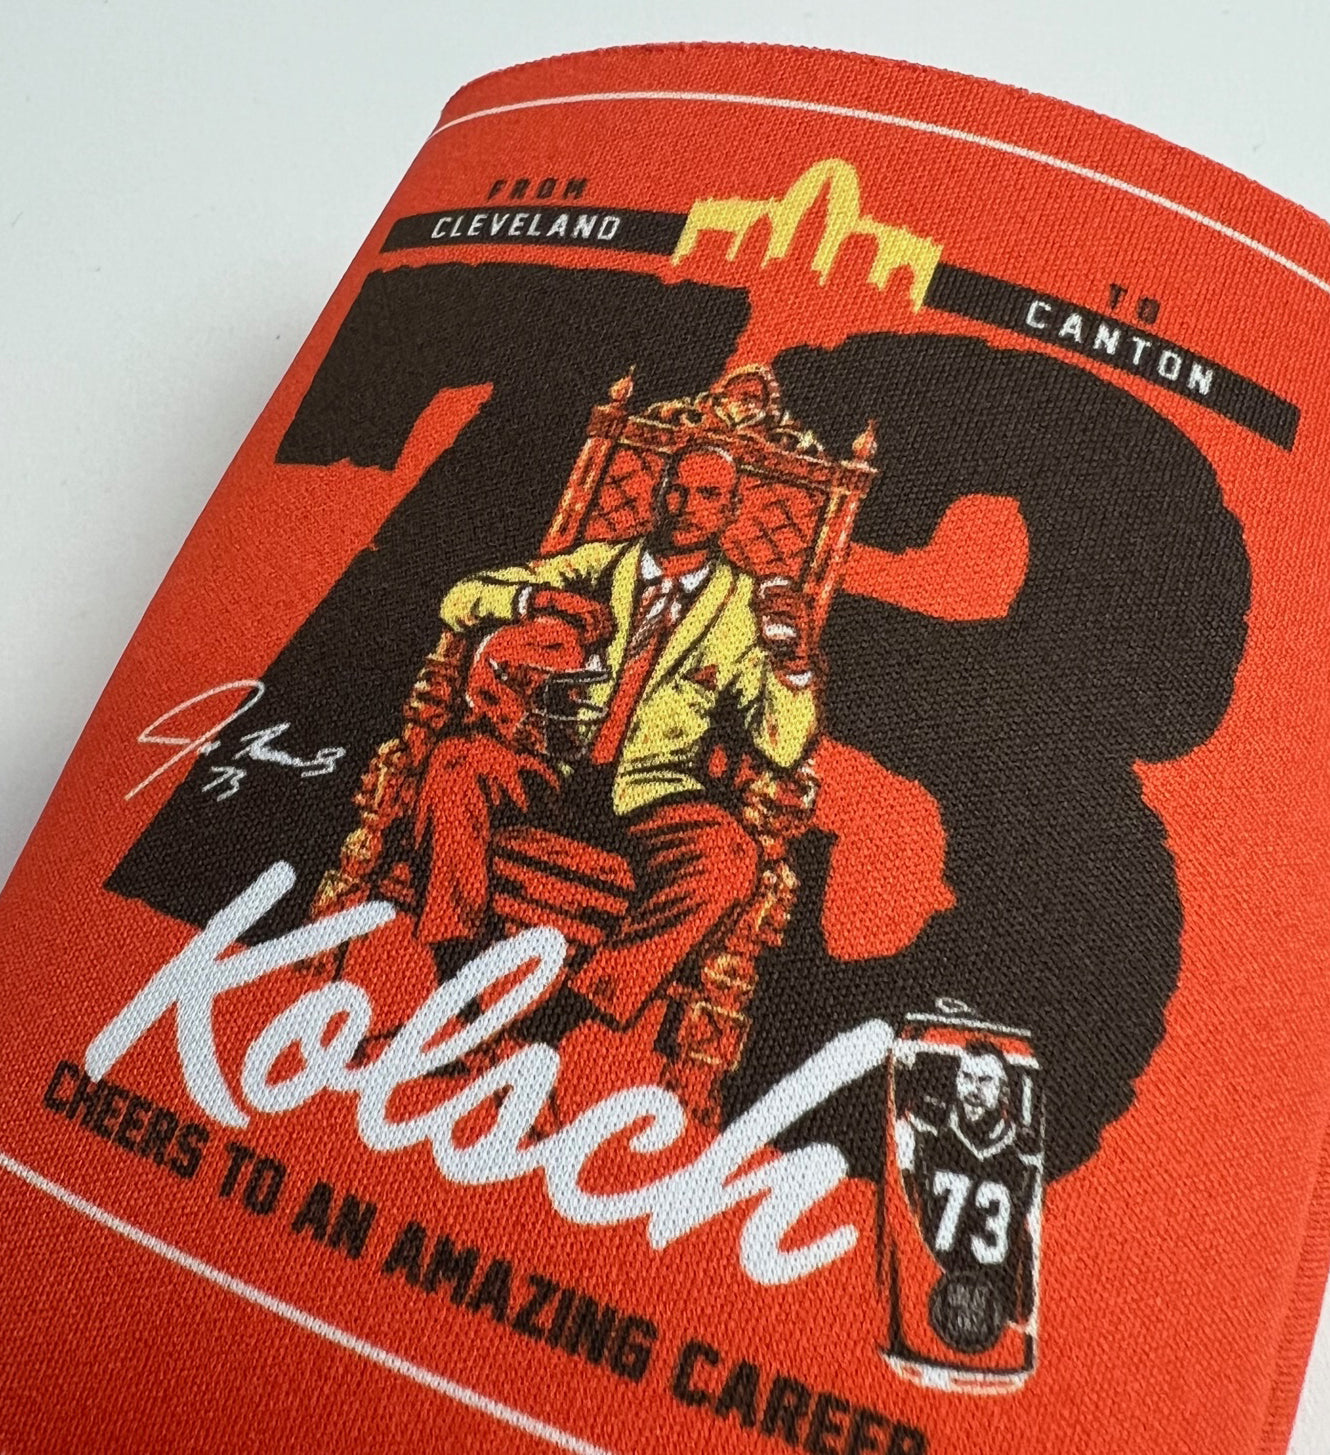 Cheers To An Amazing Career 73 Kolsch Koozie